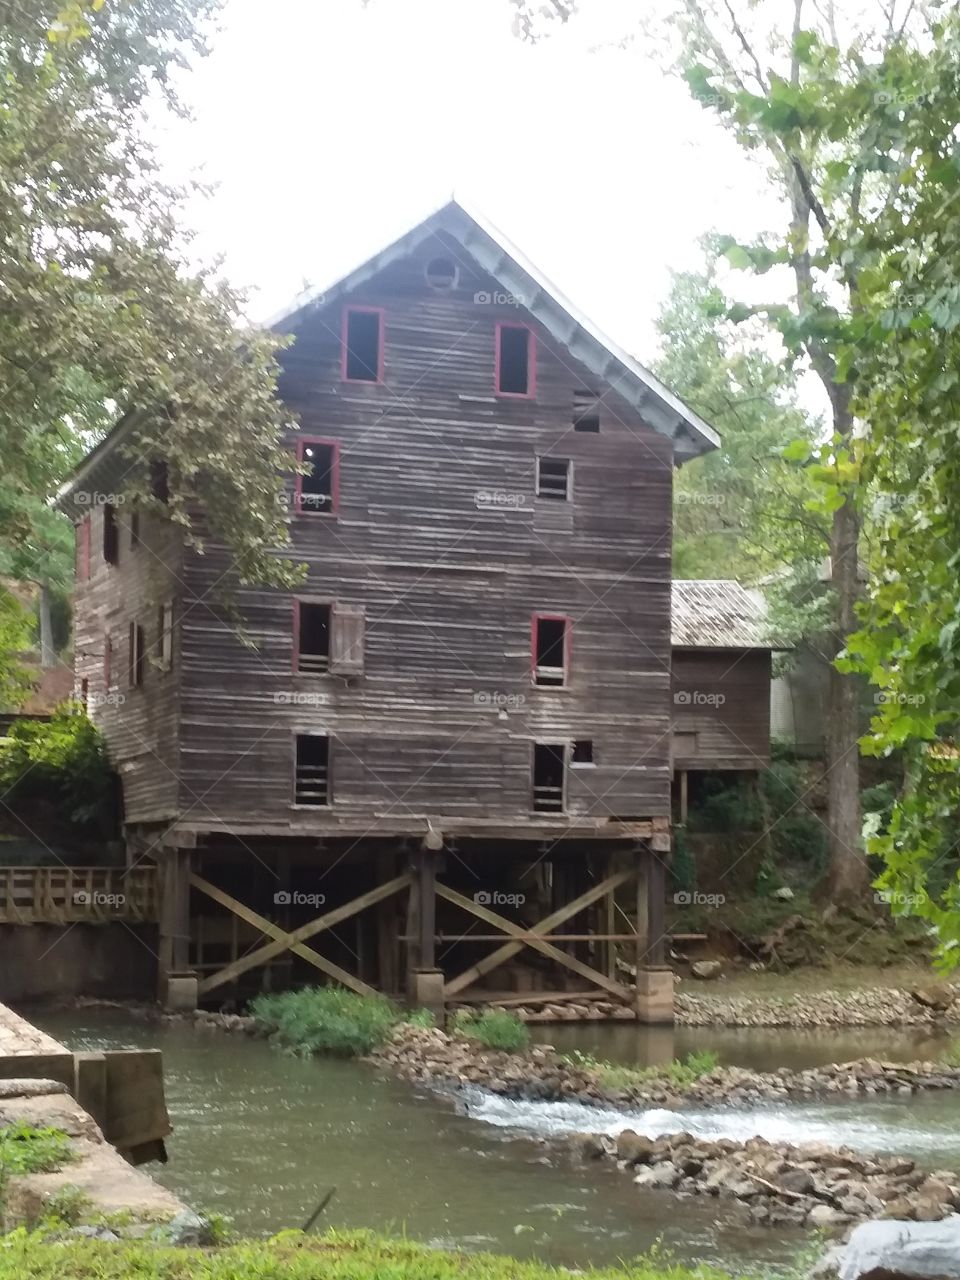 Kymulga Grist Mill 1864 Building Childersburg Alabama